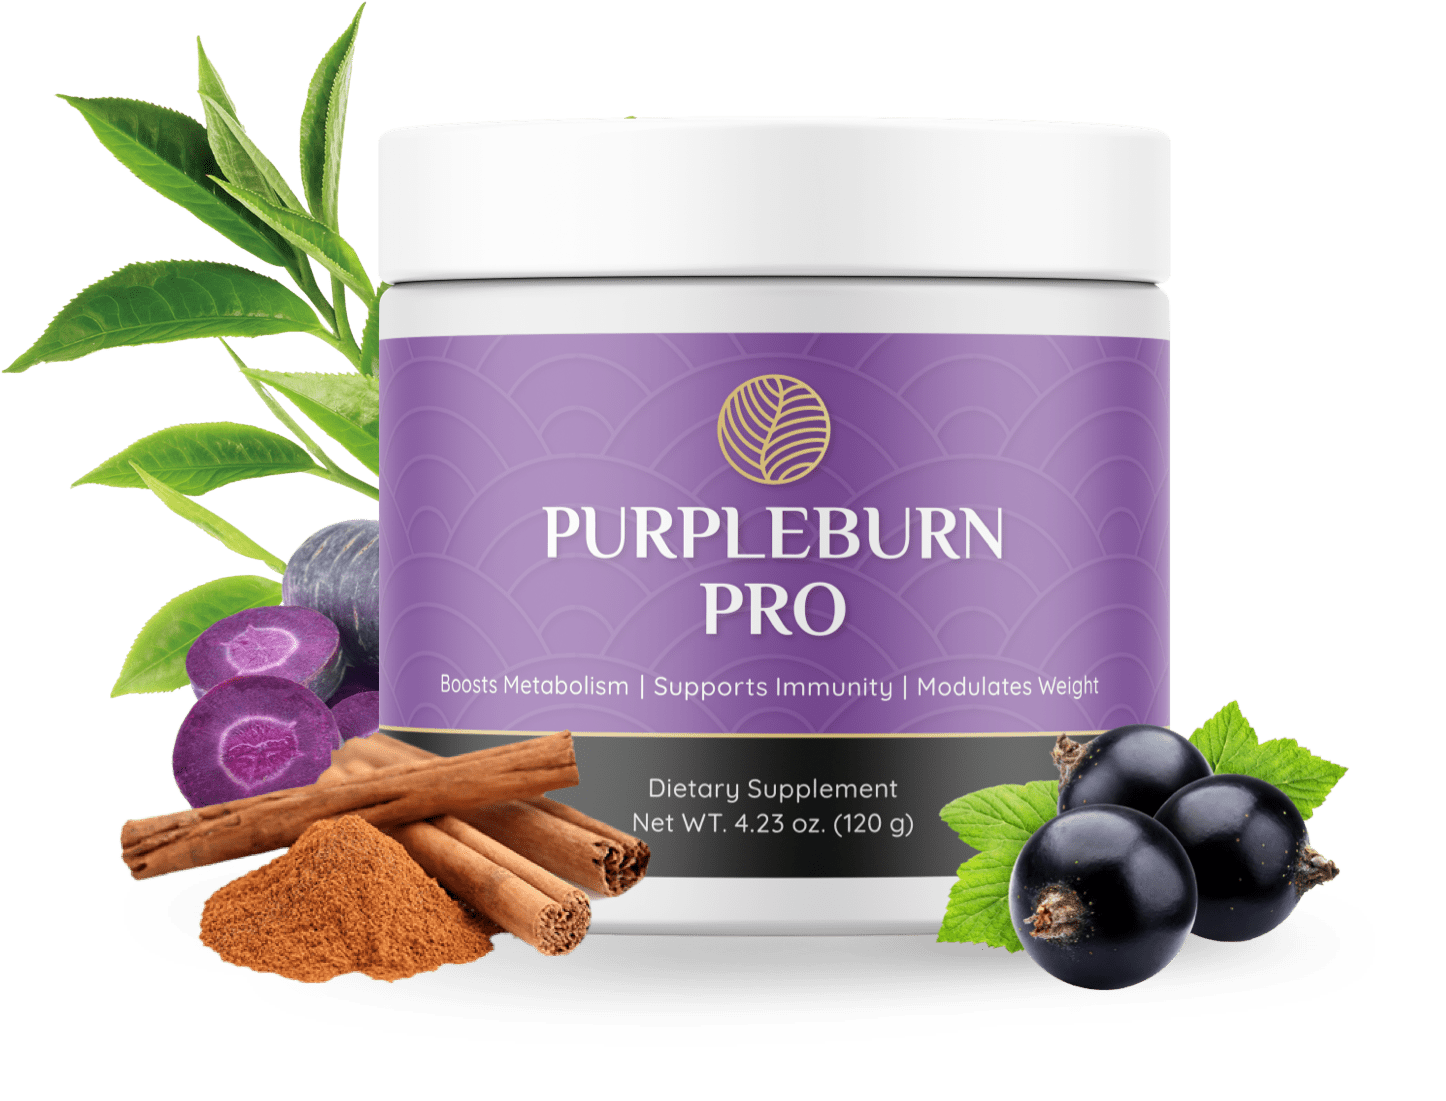 PurpleBurn Pro Official Website